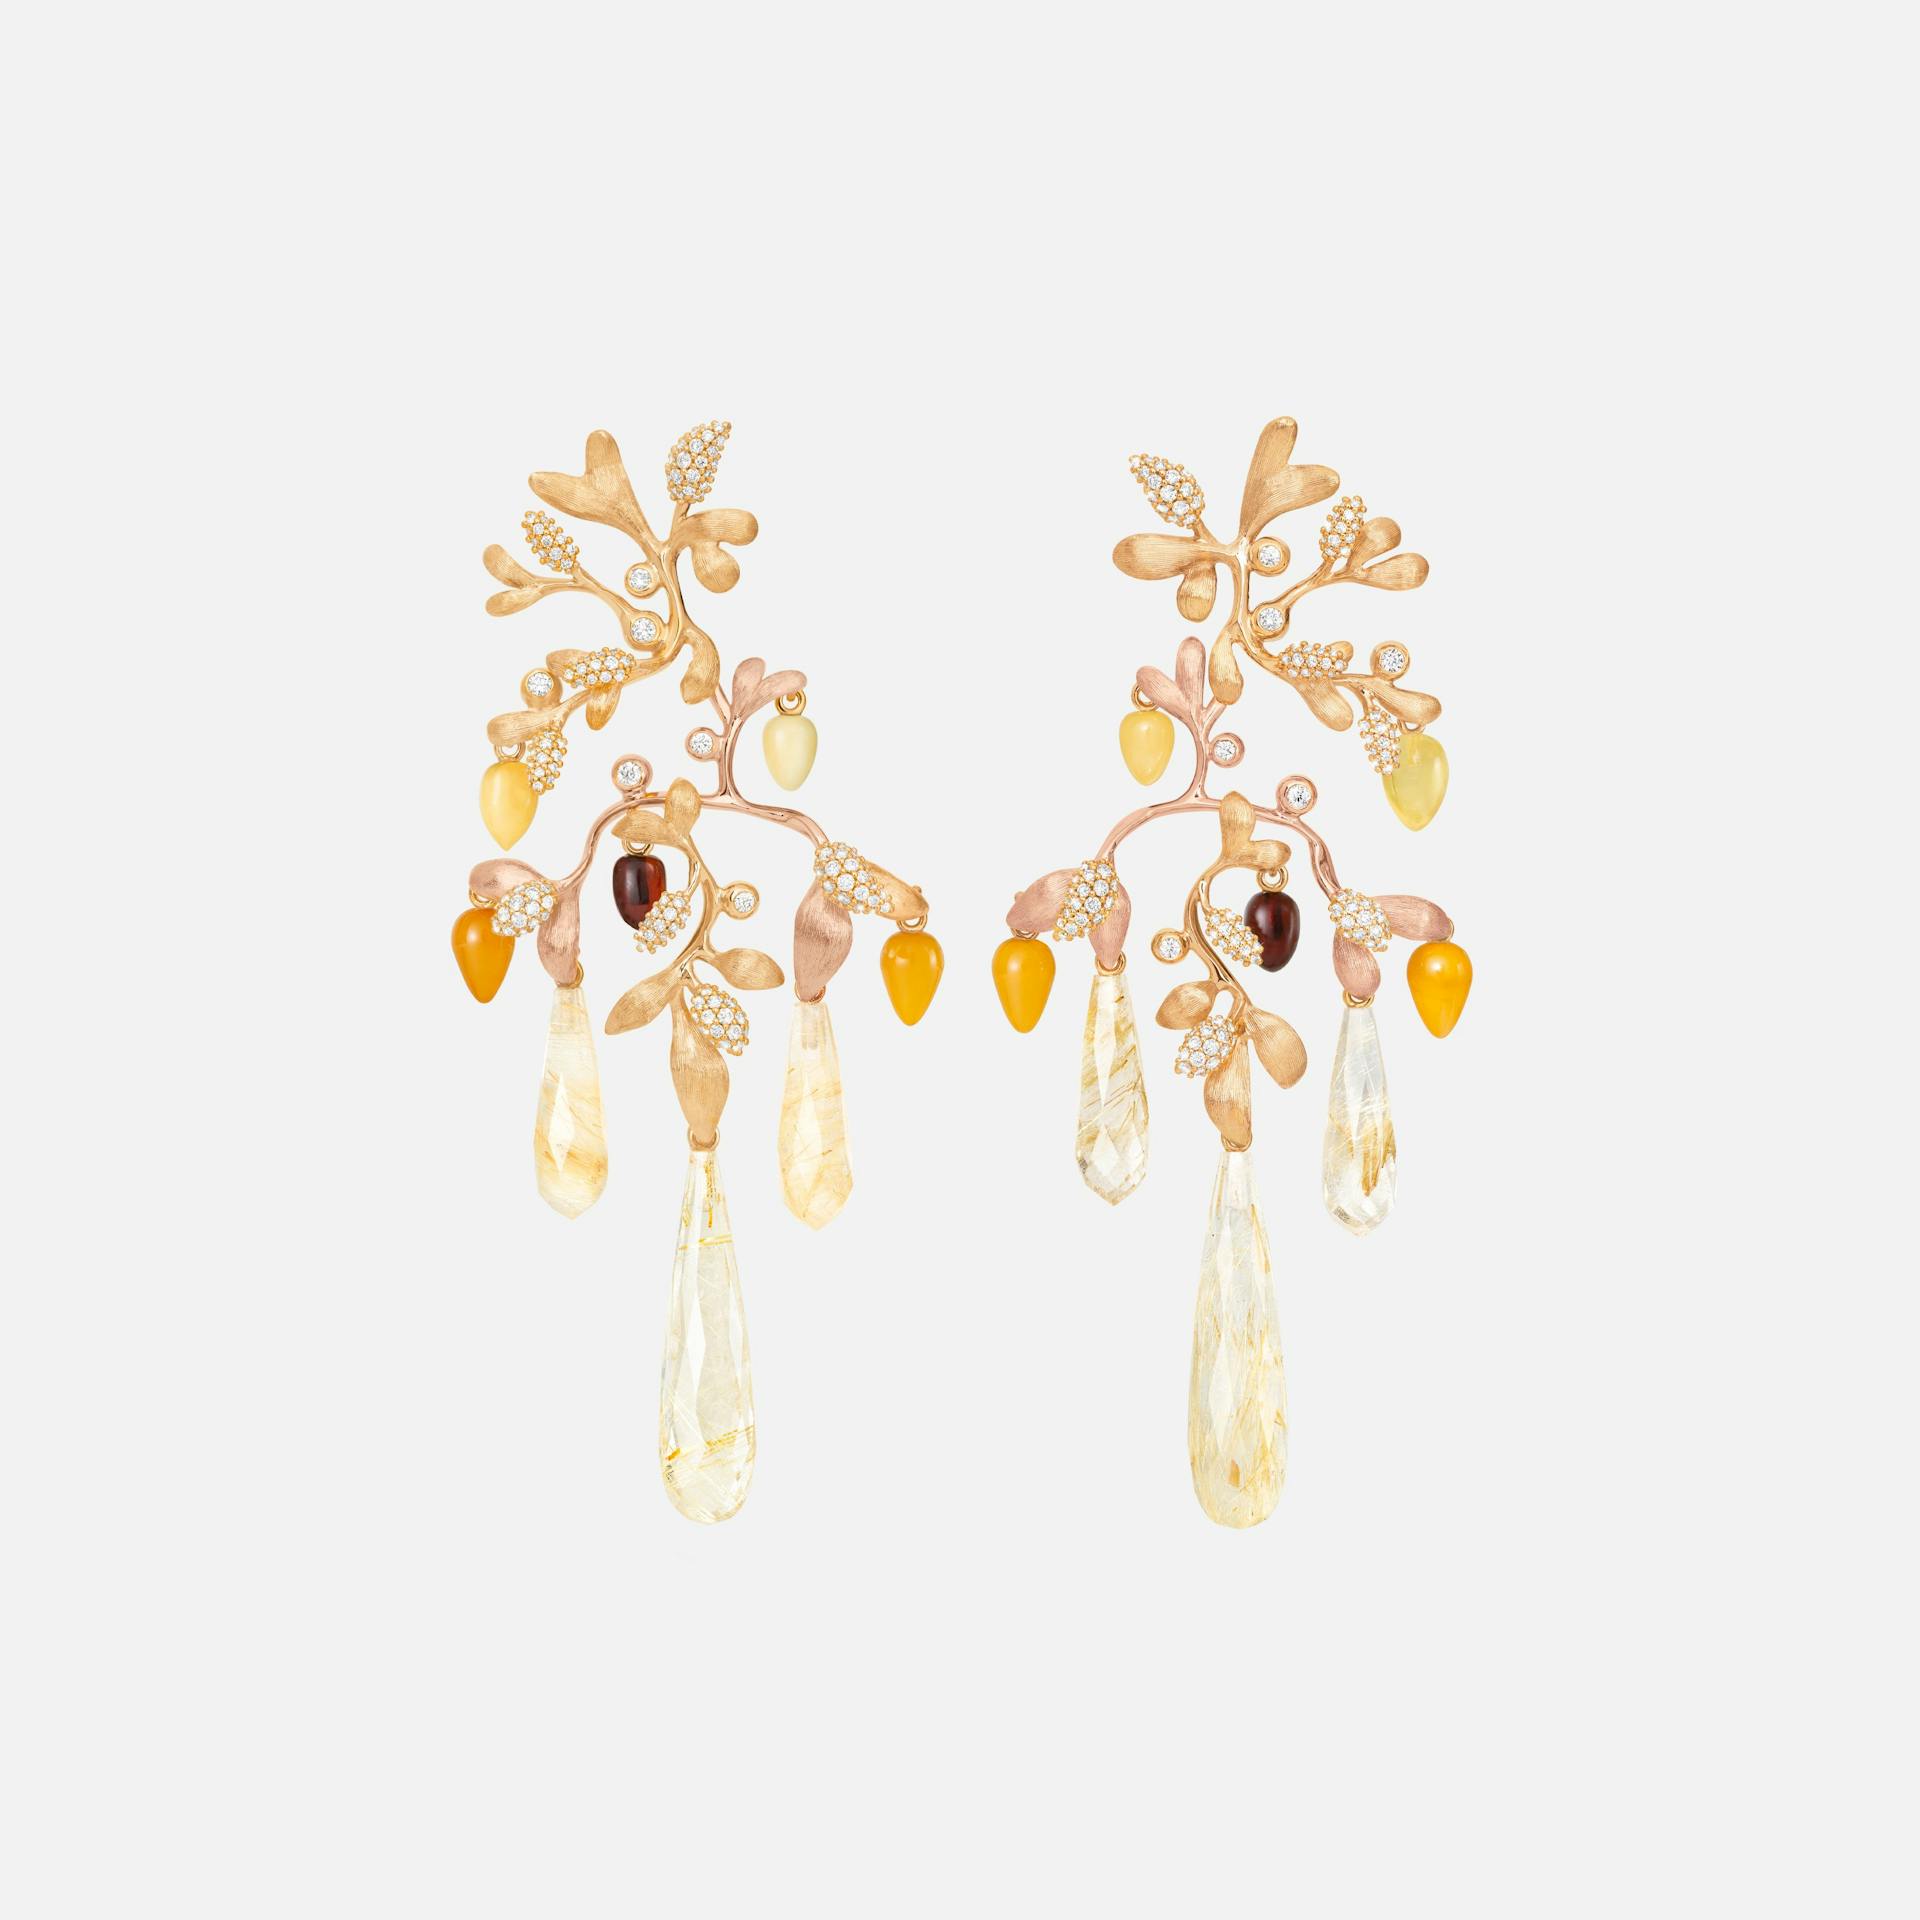 Gipsy earrings